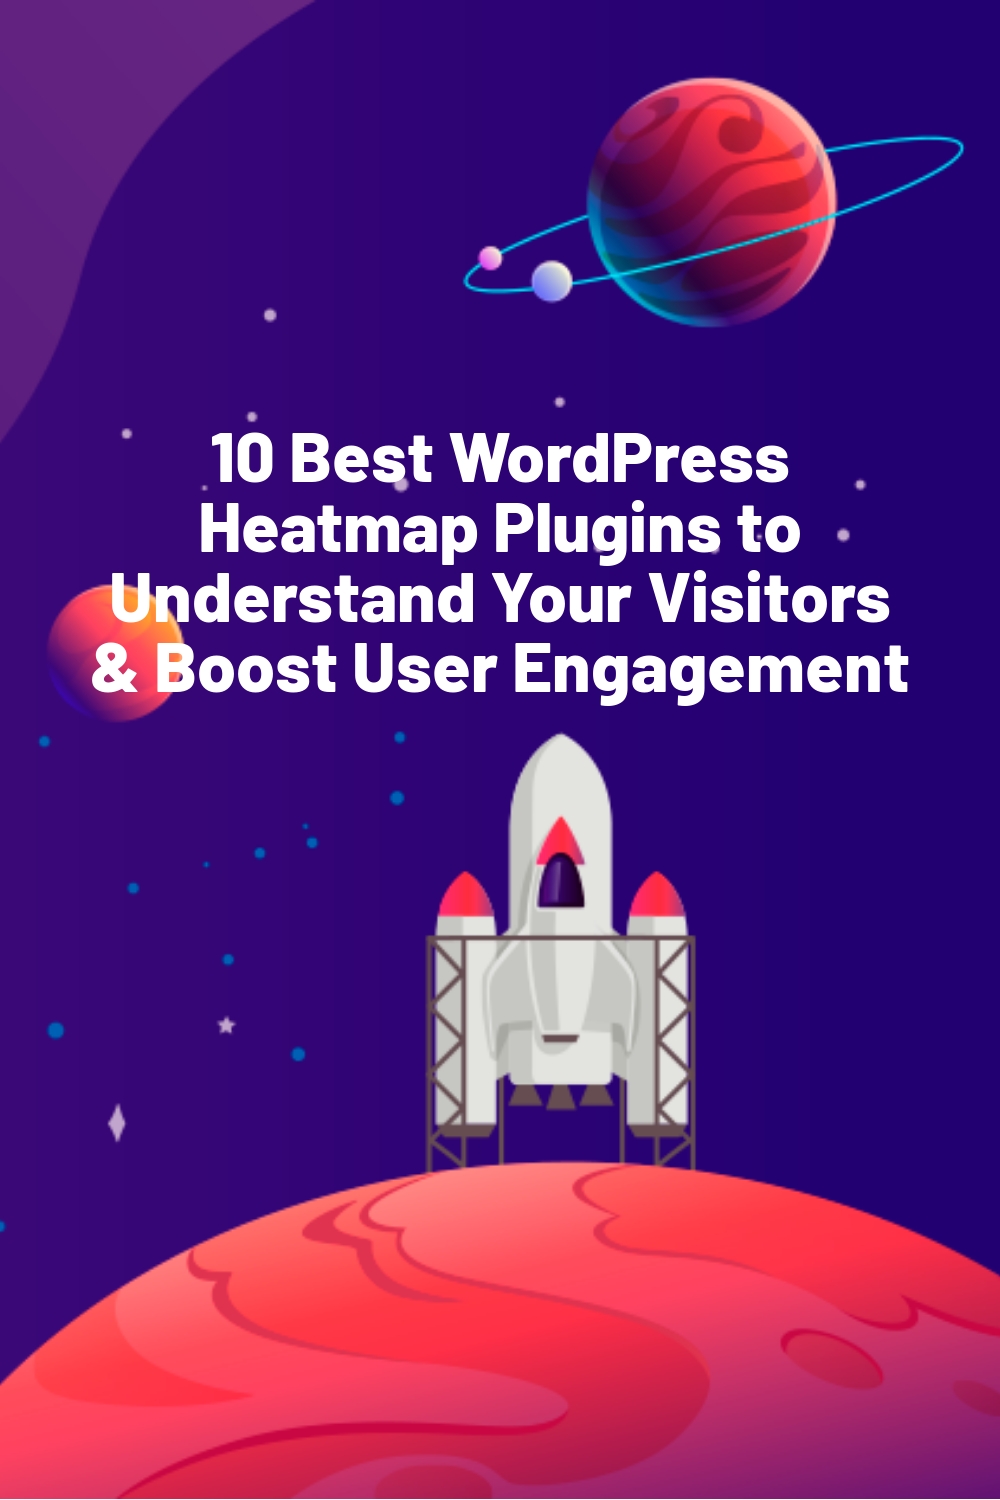 10 Best WordPress Heatmap Plugins to Understand Your Visitors & Boost User Engagement